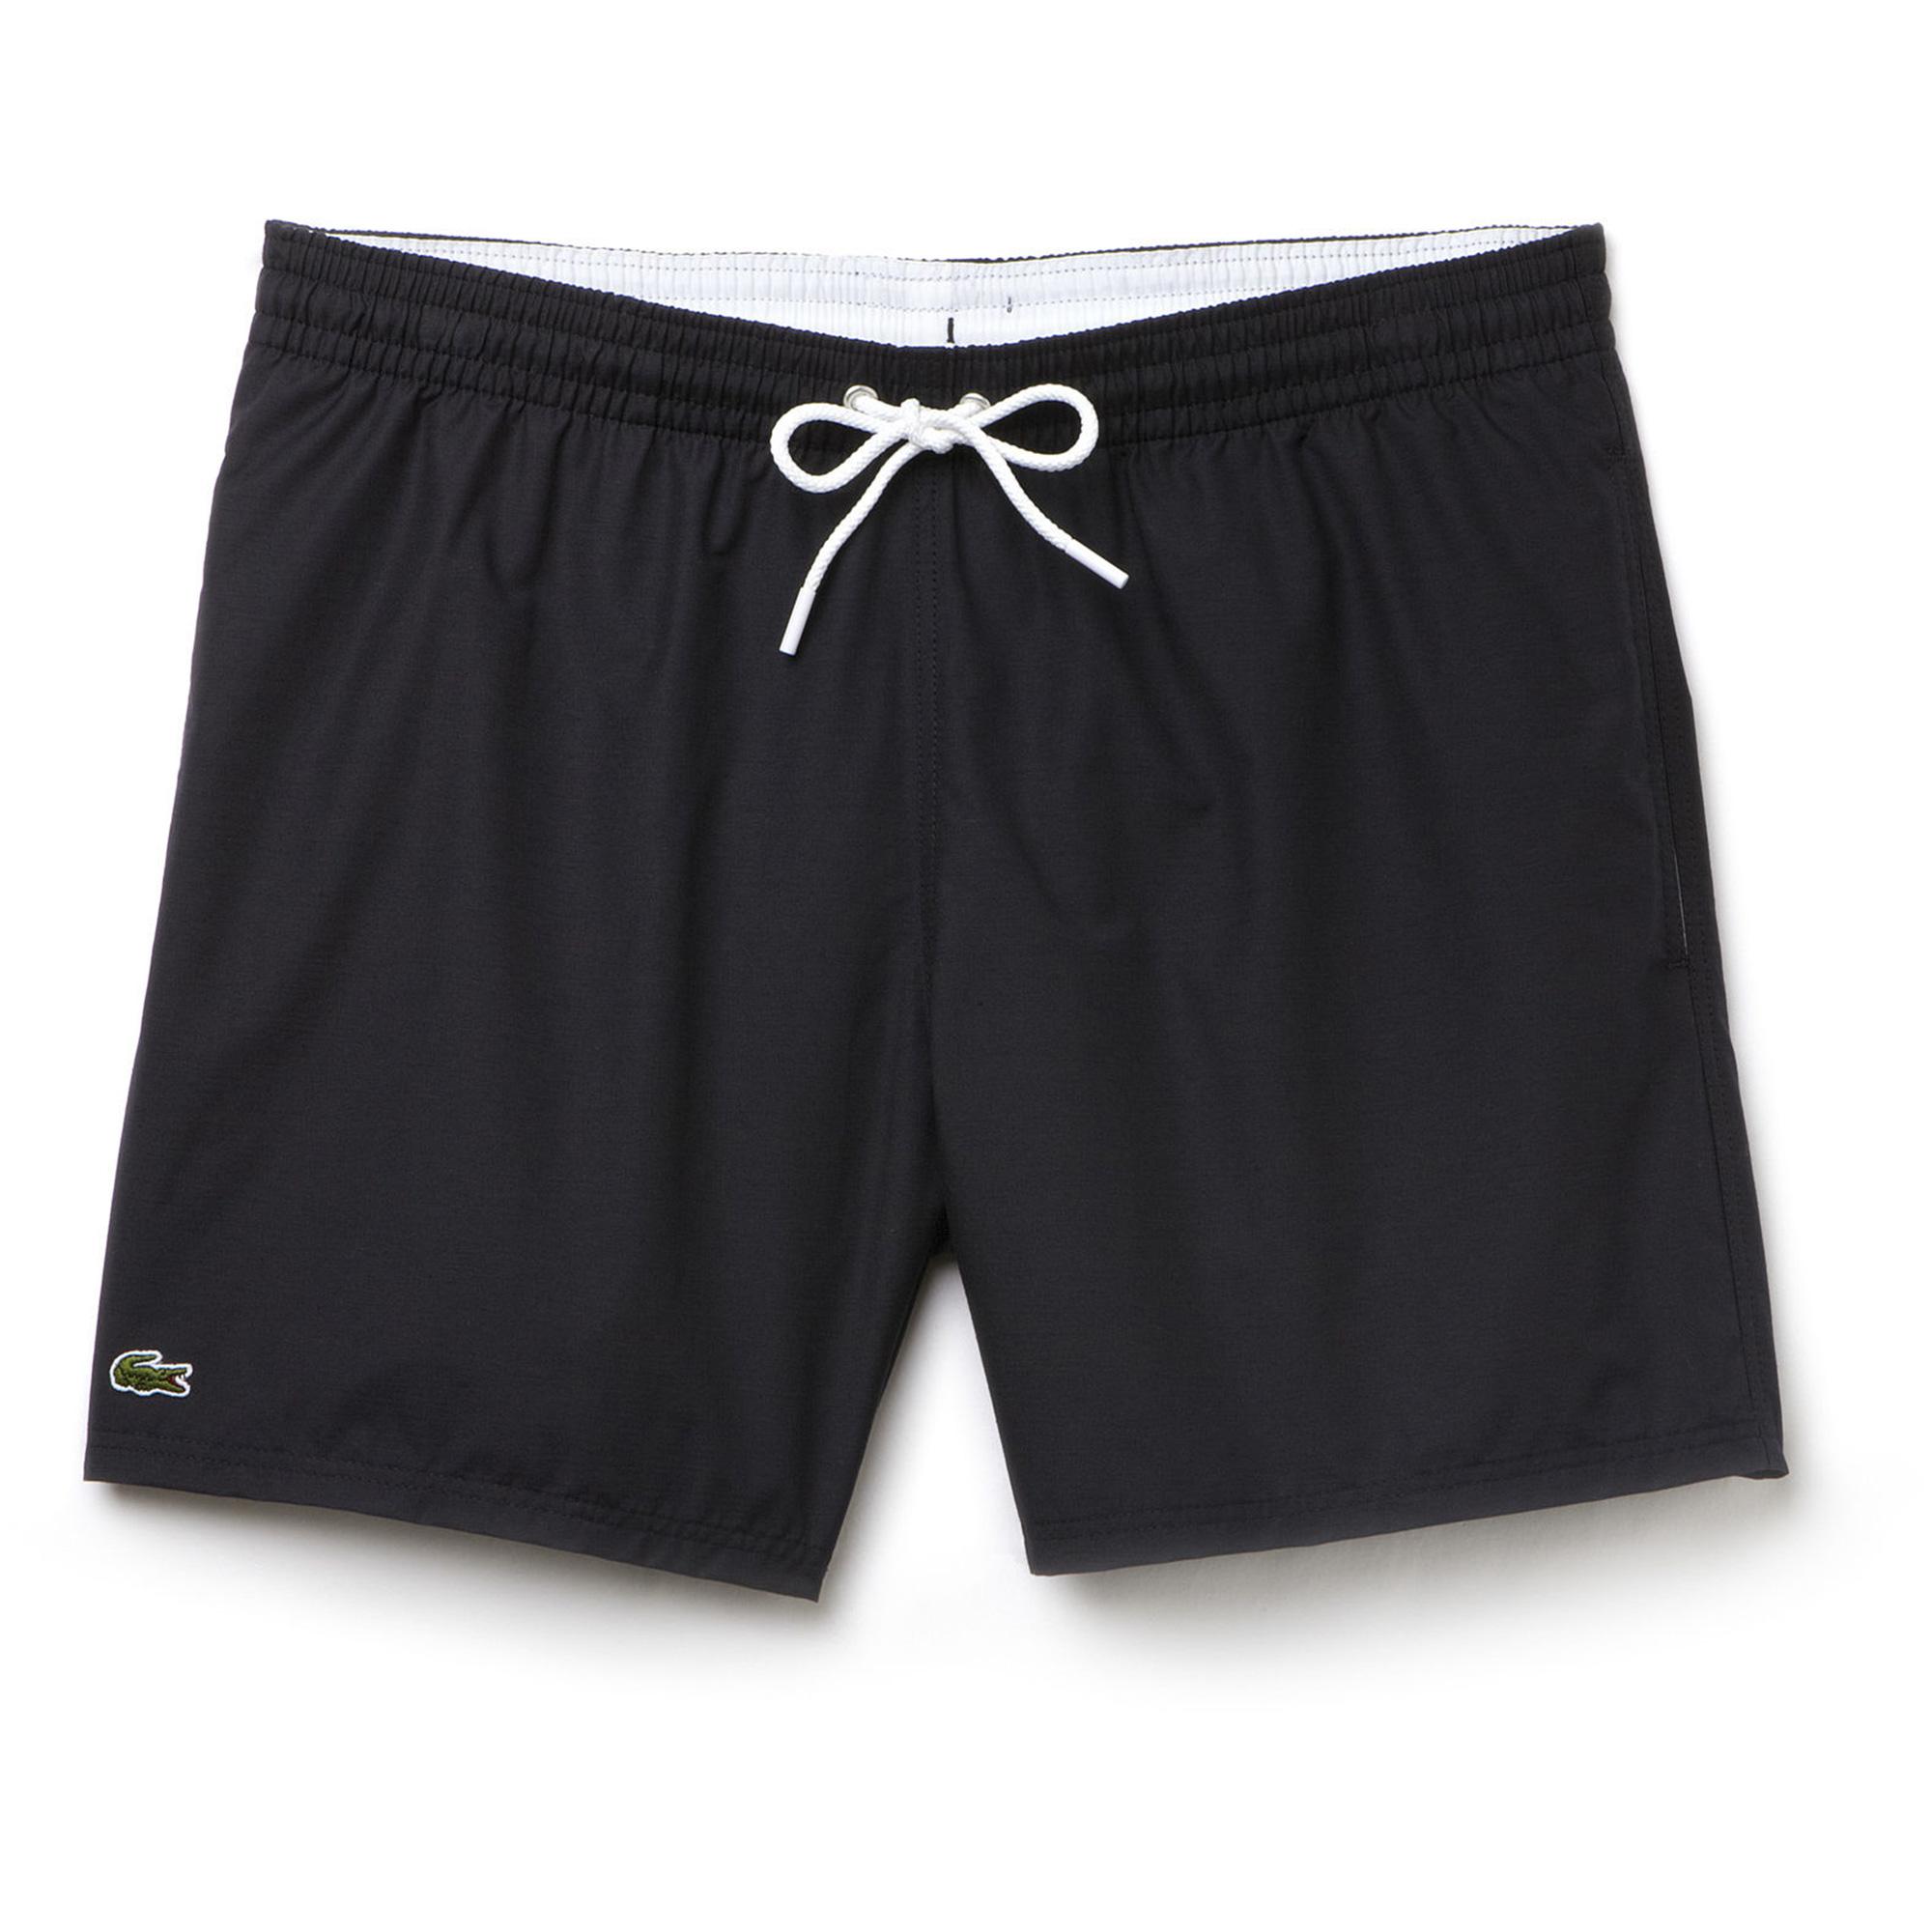 Lacoste Mens Leisure Shorts - Black - Tennisnuts.com